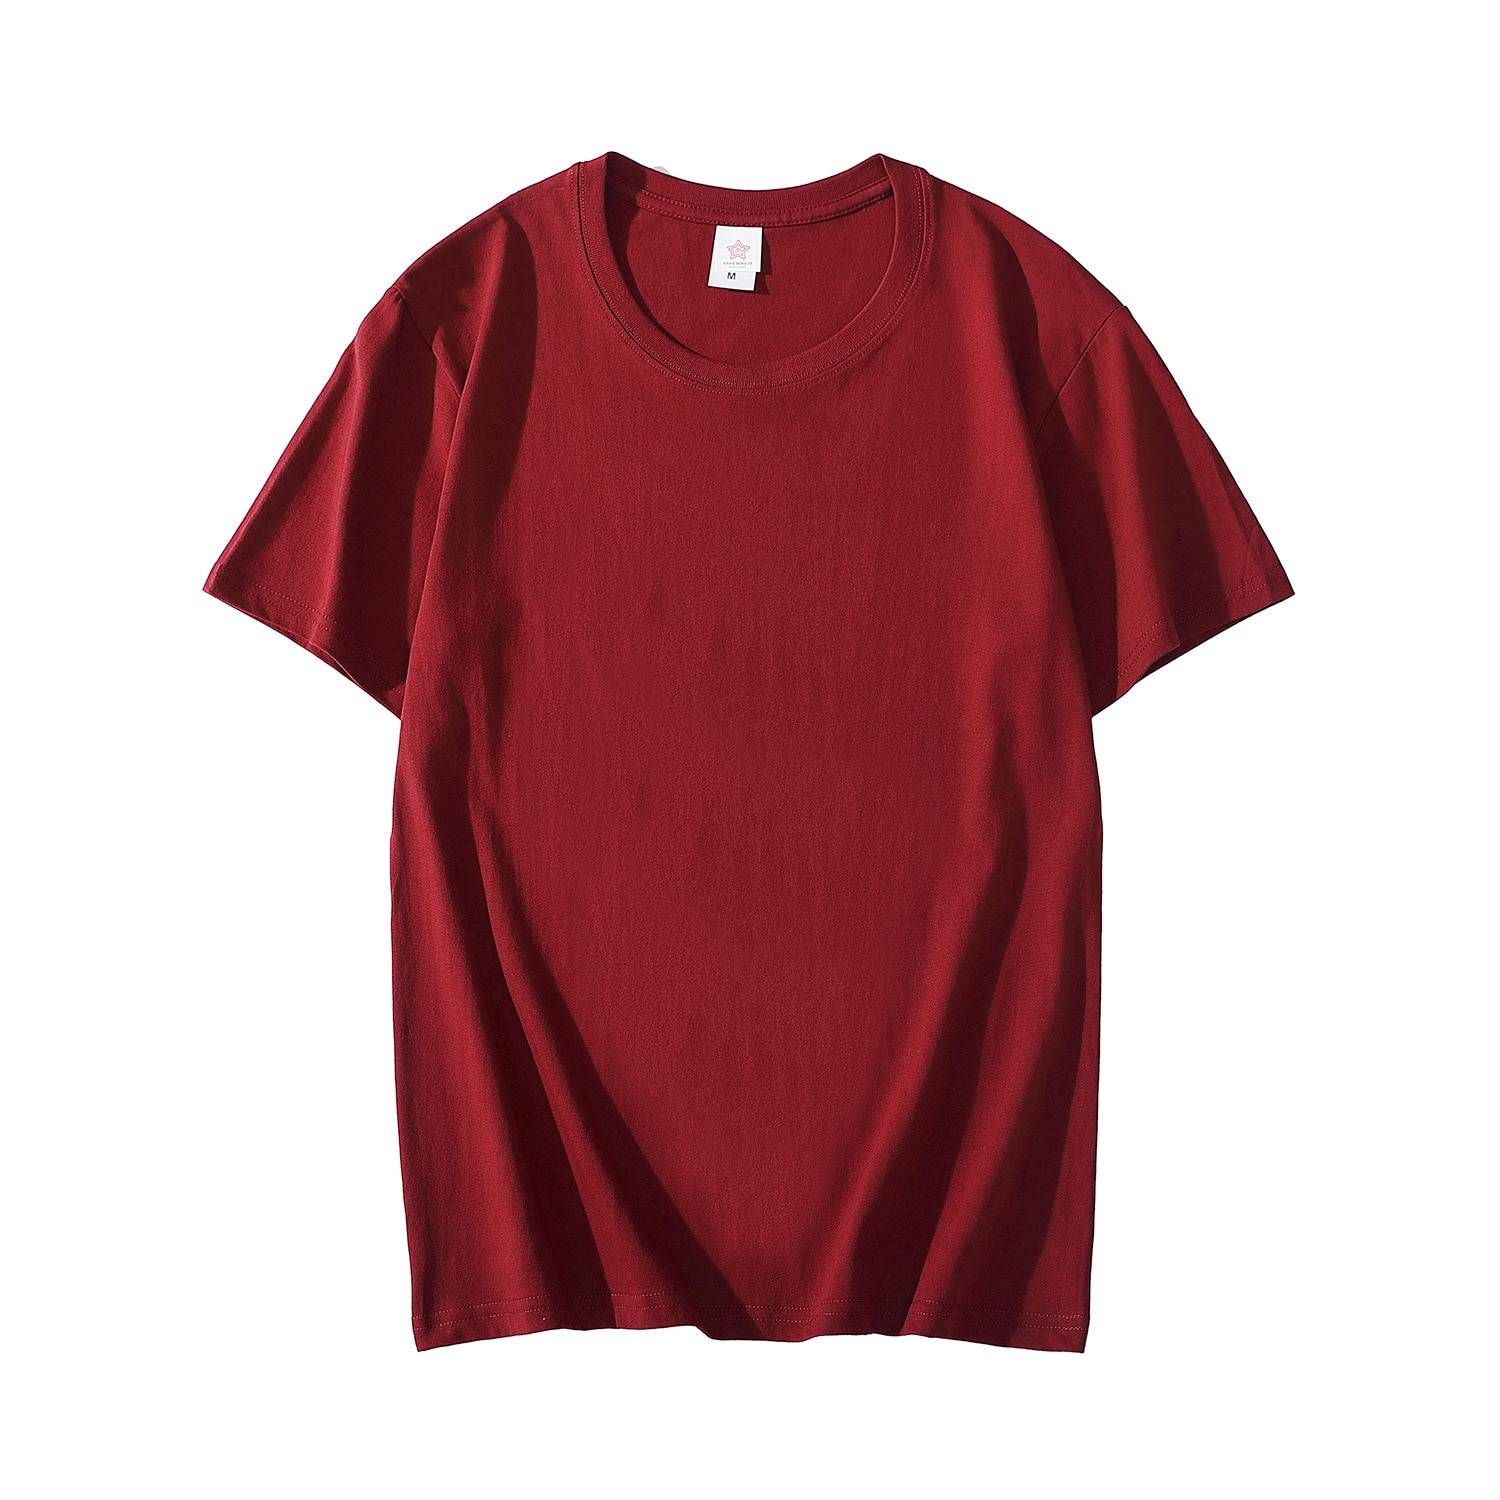 Men's Cotton Solid Color Short Sleeved T-Shirt